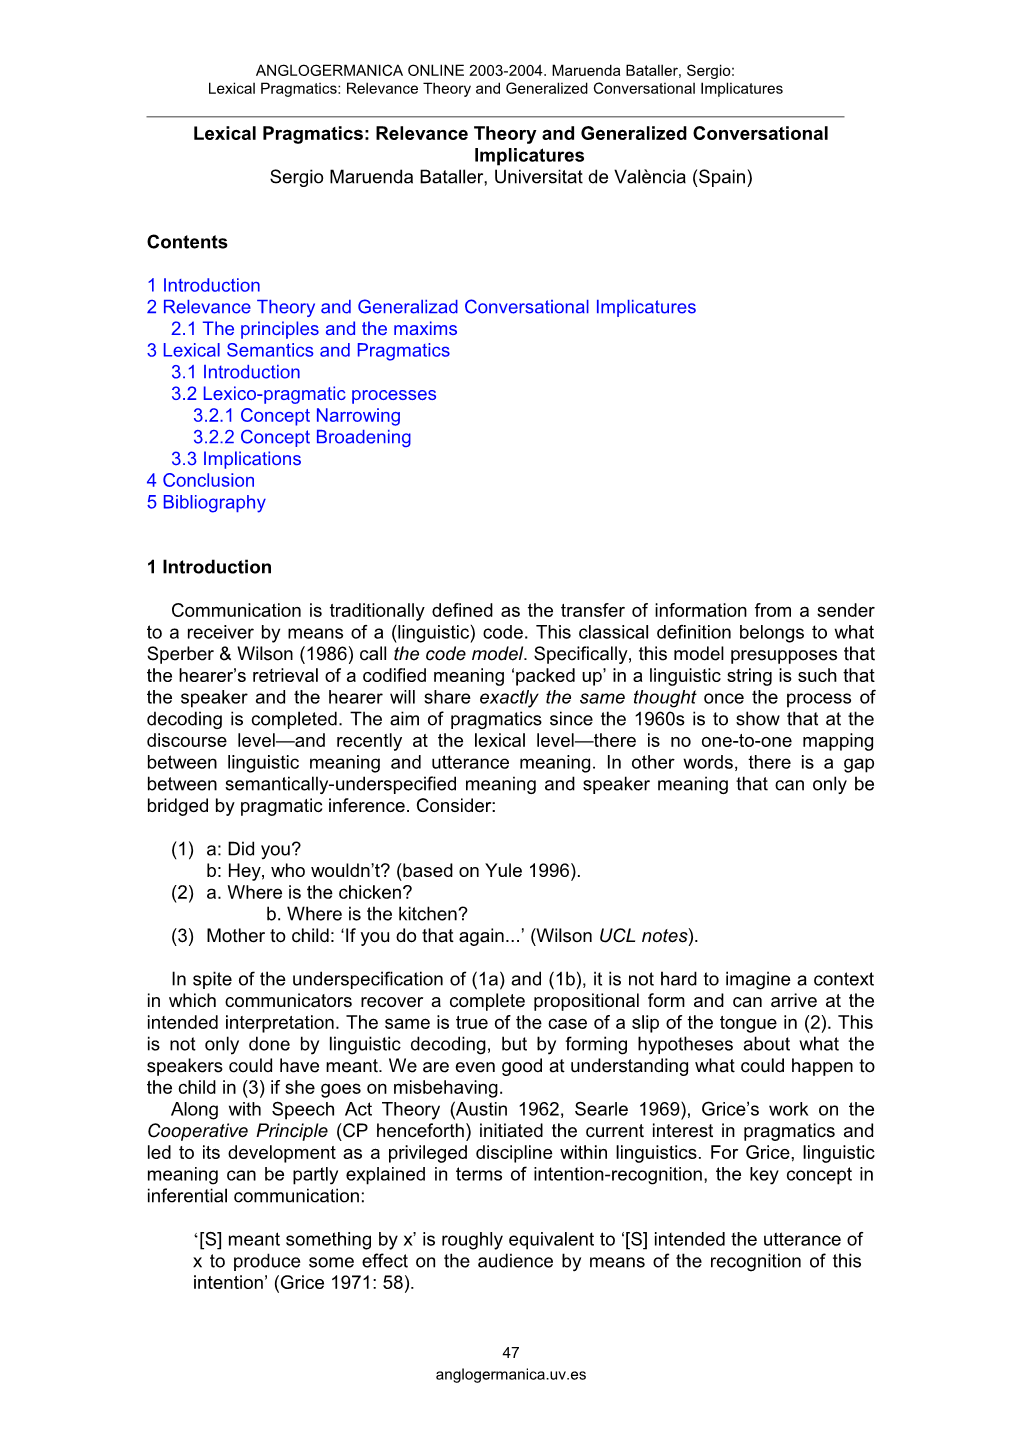 AG2003-04 Maruenda Lexical Pragmatics: Relevance Theory